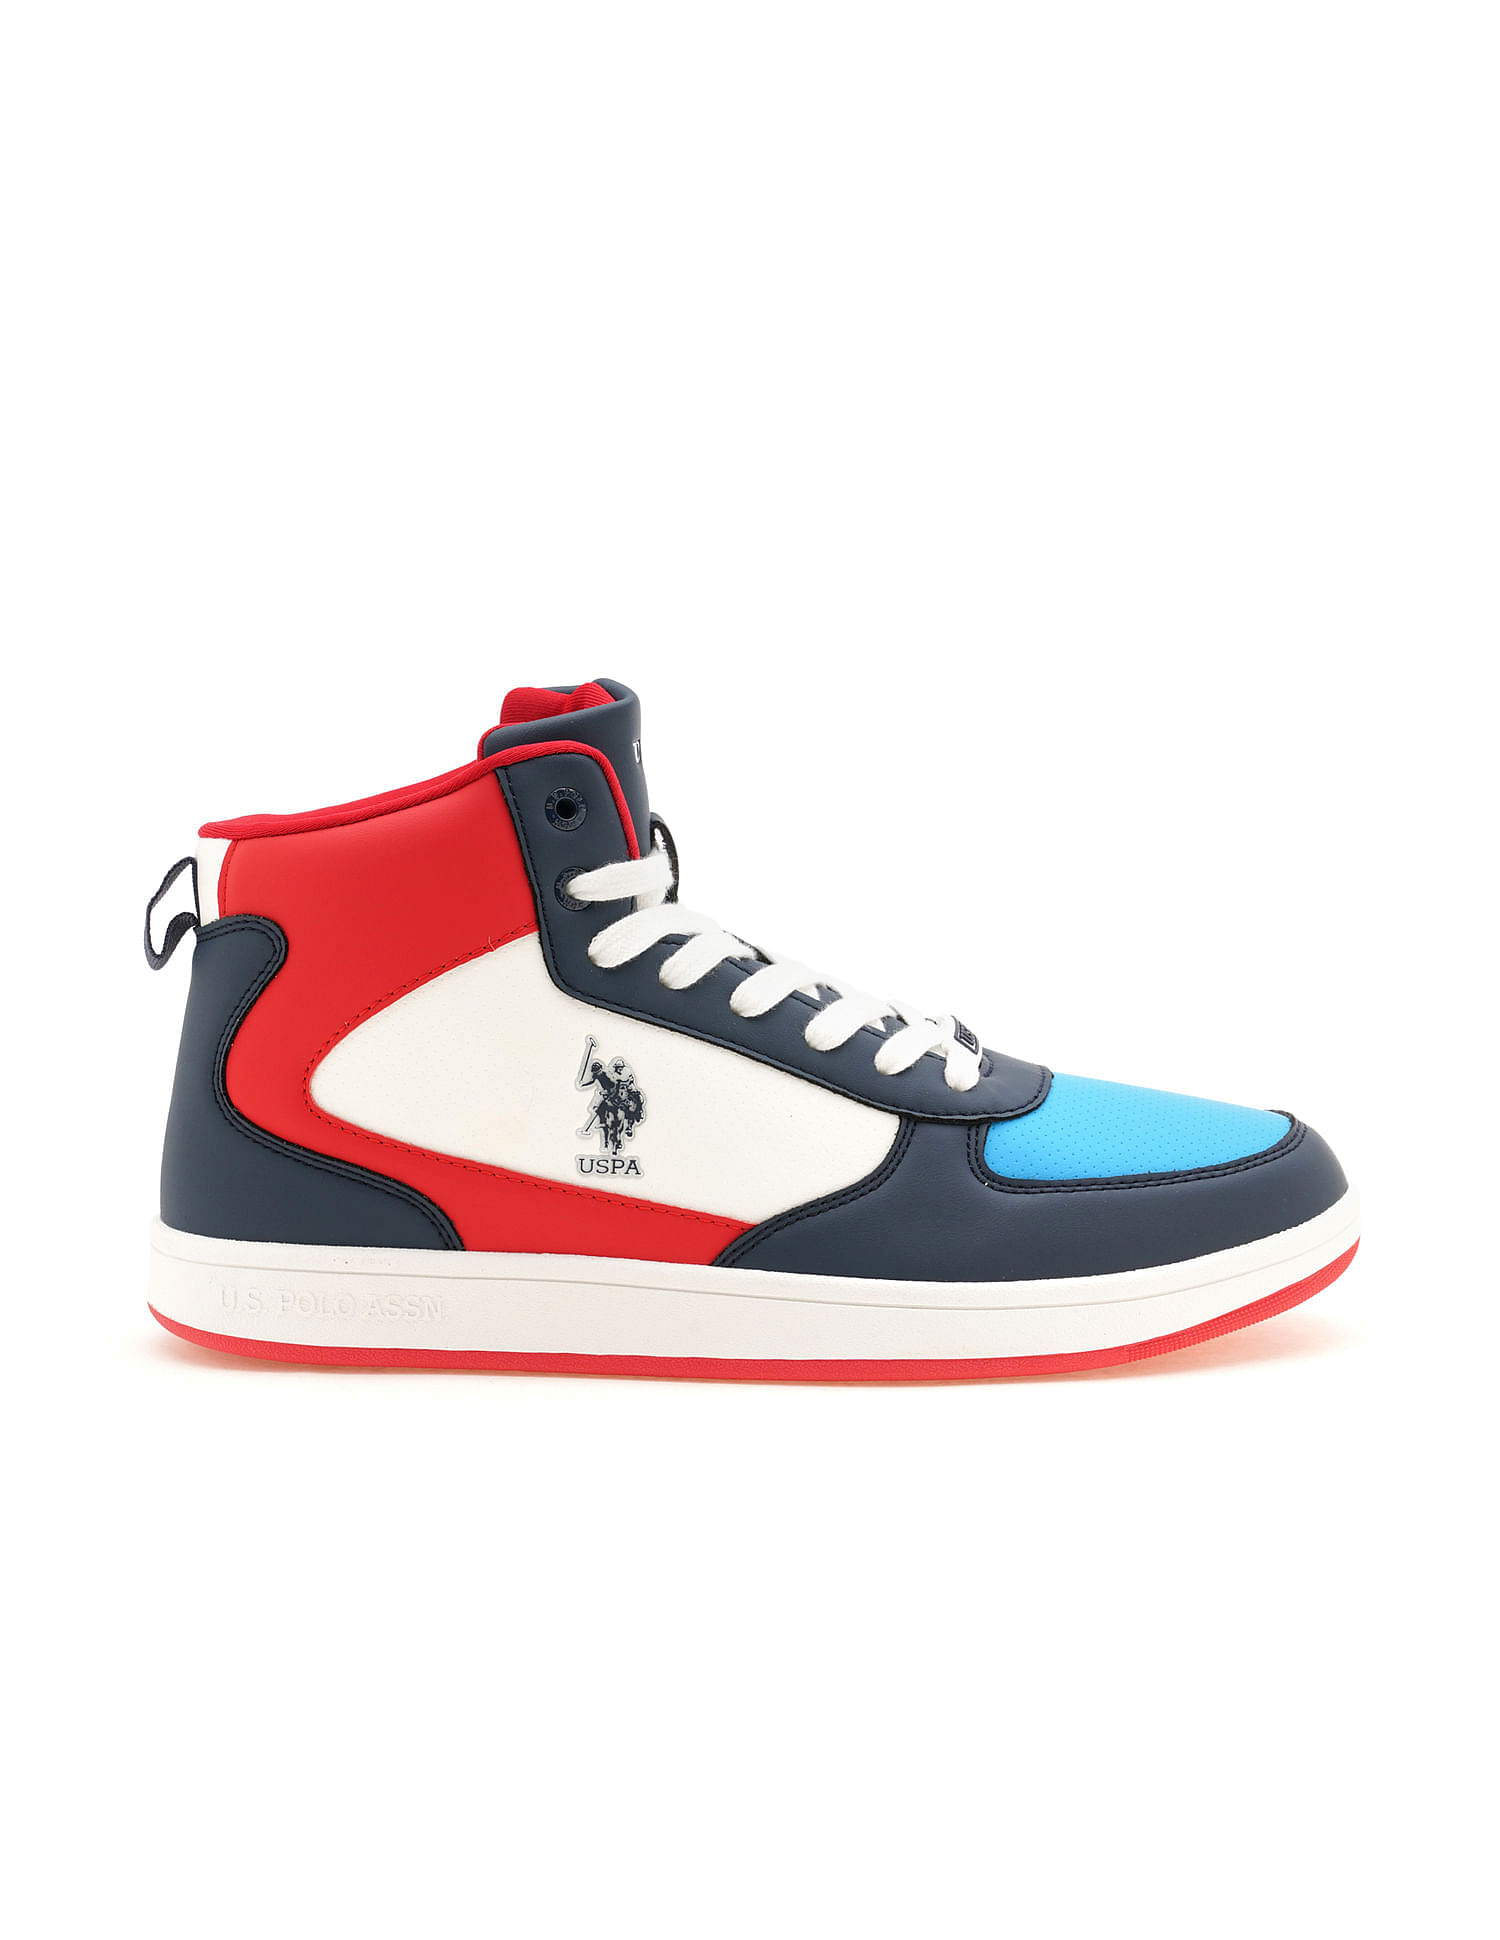 LRL Ralph Lauren Veeta Red Canvas/ Brown leather Shoes Sneakers Women's 9 B  | eBay